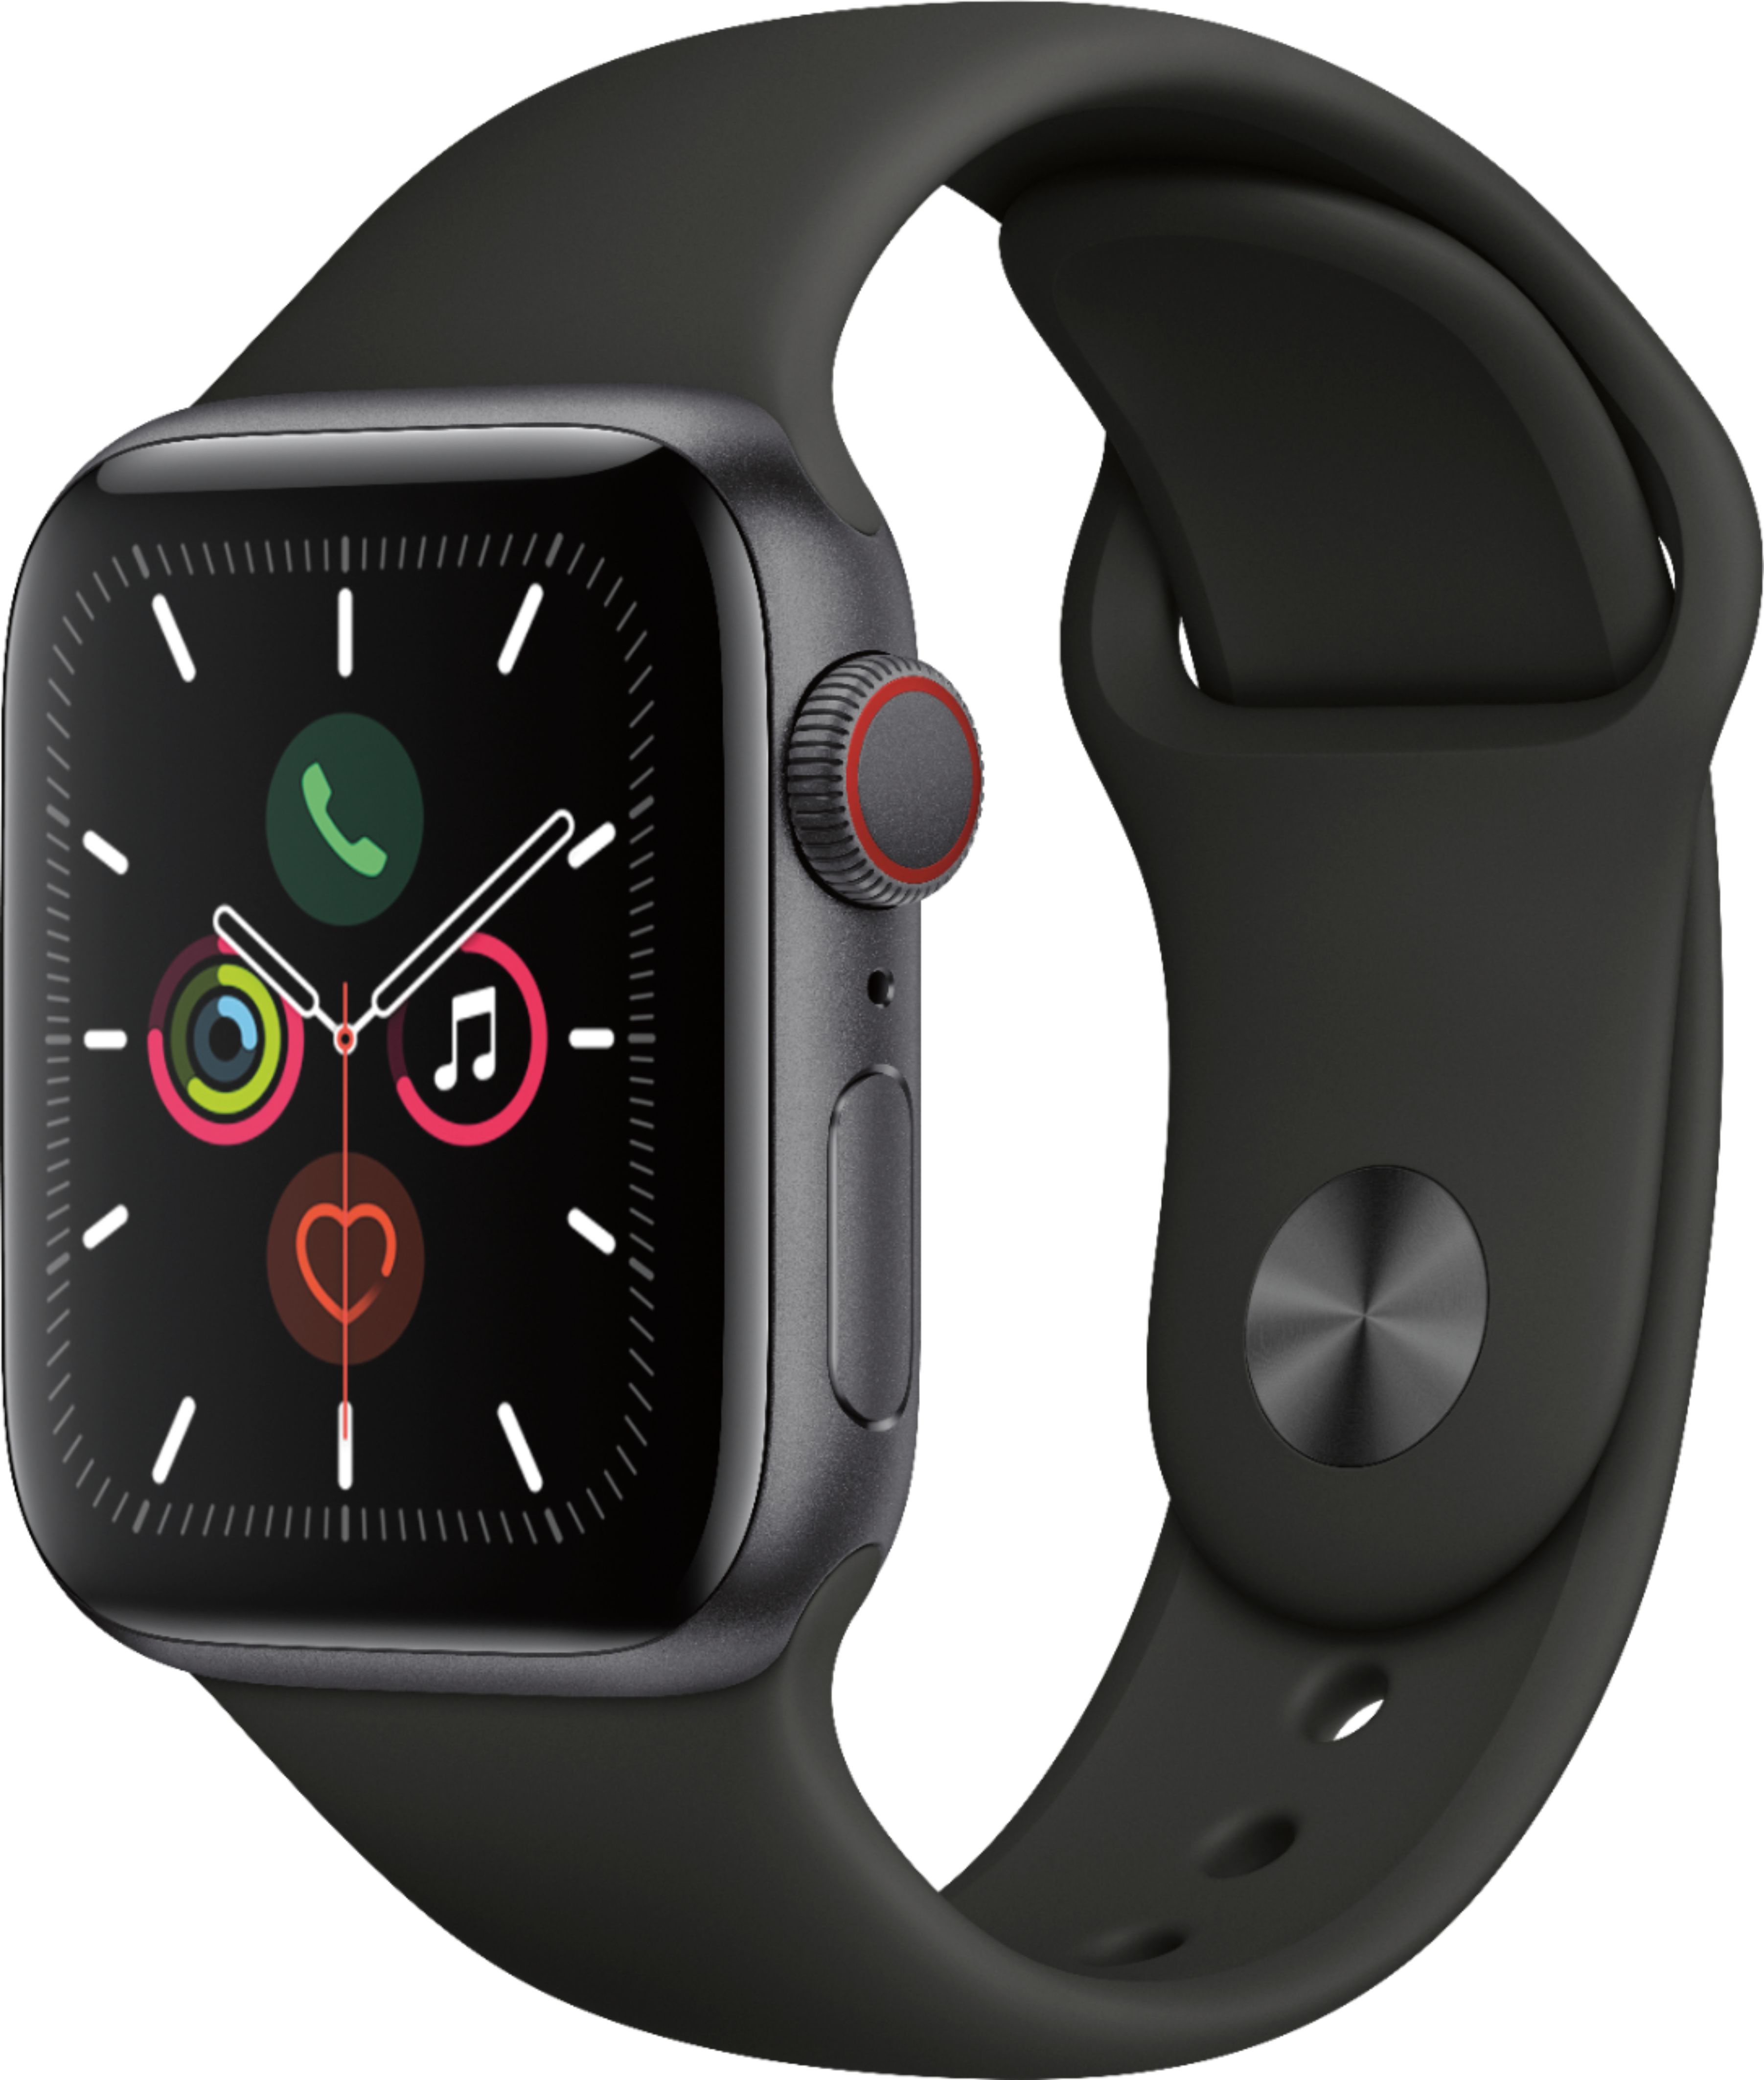 Apple Watch Series 5 (GPS + Cellular) 40mm Space Black Stainless Steel Apple Watch Series 5 Stainless Steel Black